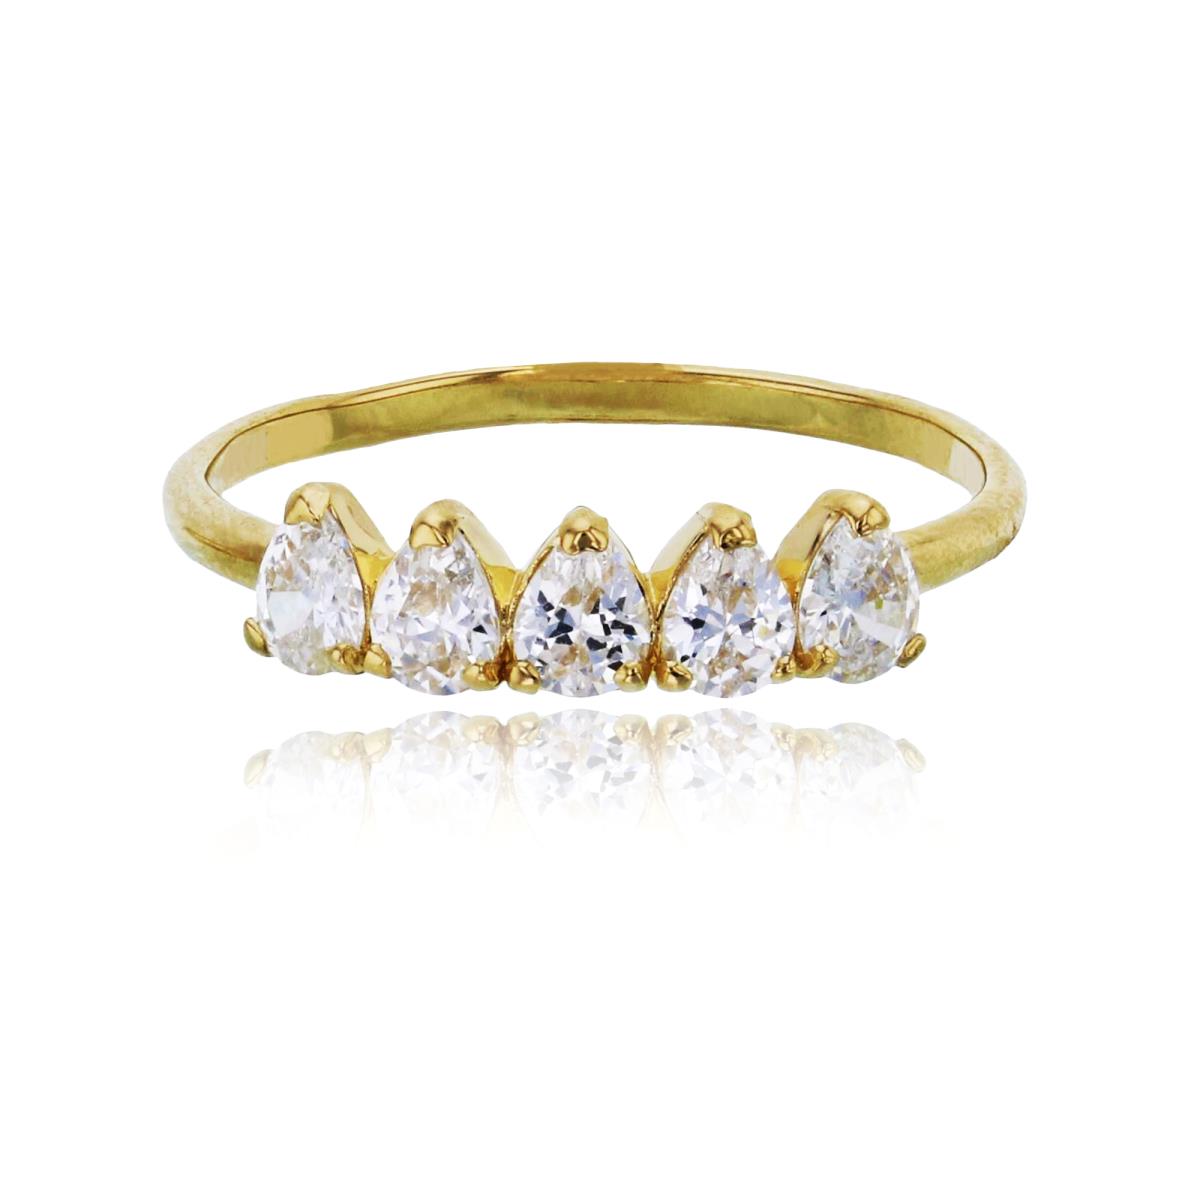 10K Yellow Gold 5-Stone 4x3mm Pear Cut Fashion Ring